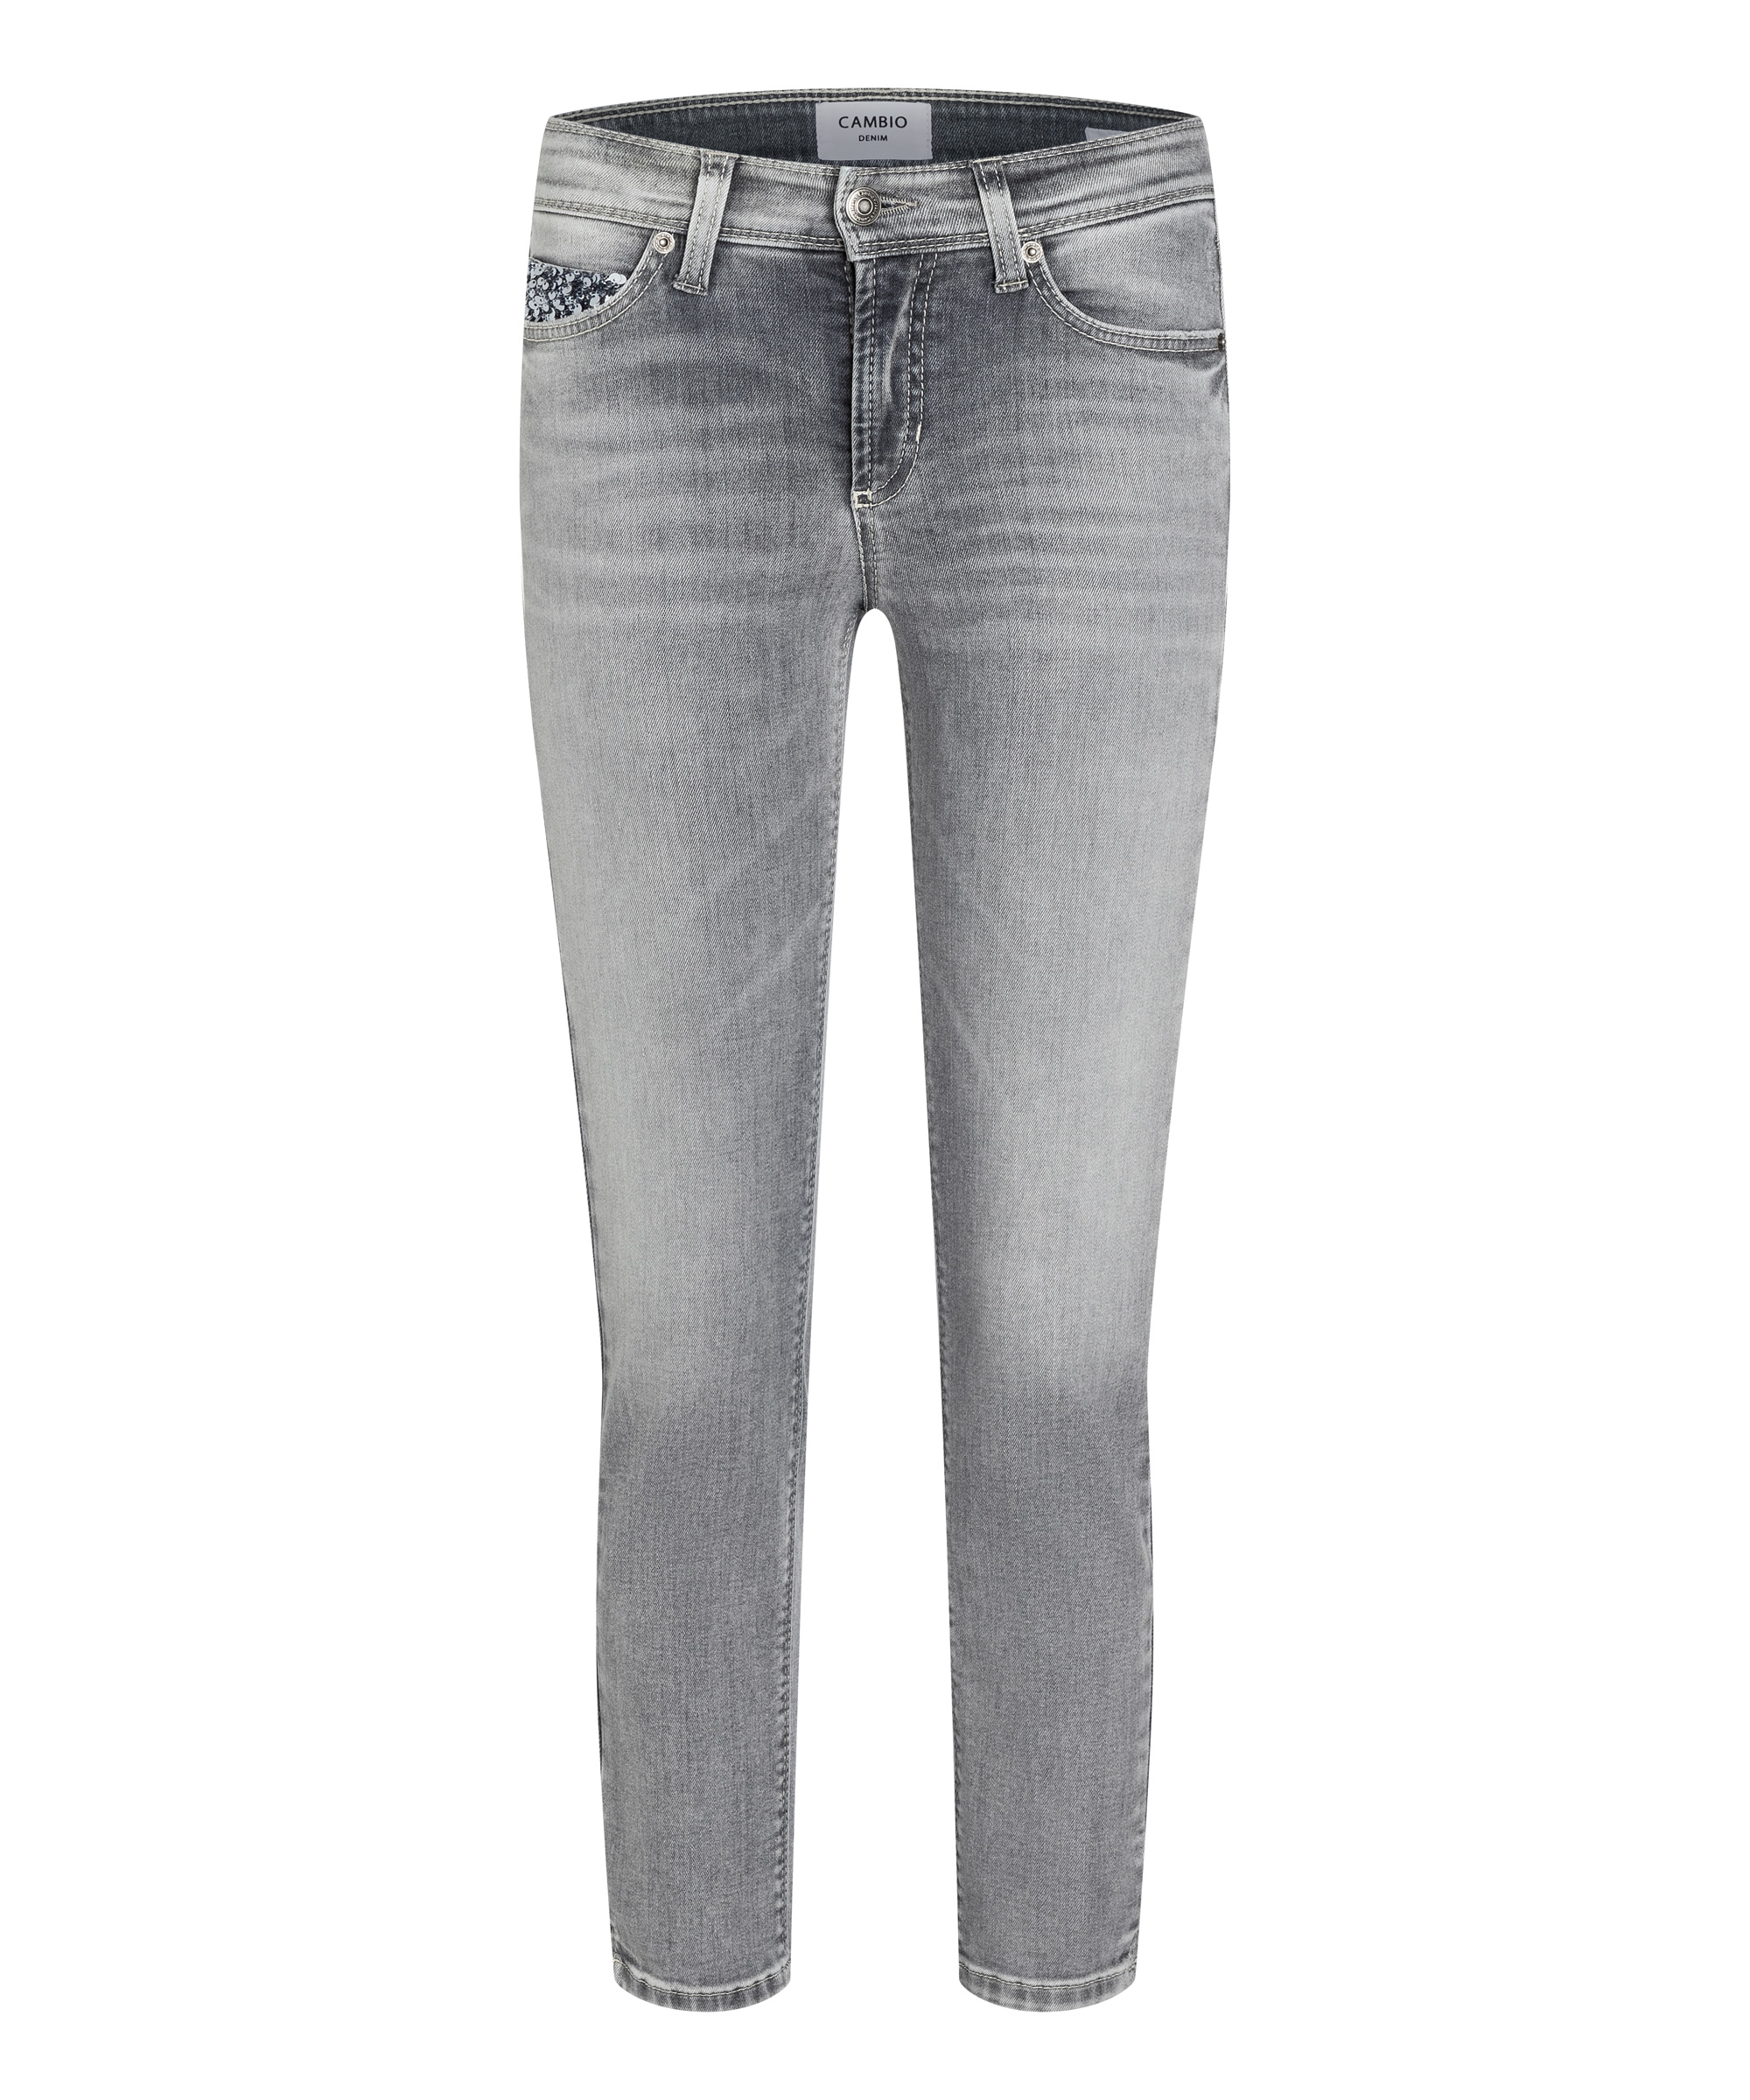 Cambio Jeans Piper short – RUMMEL